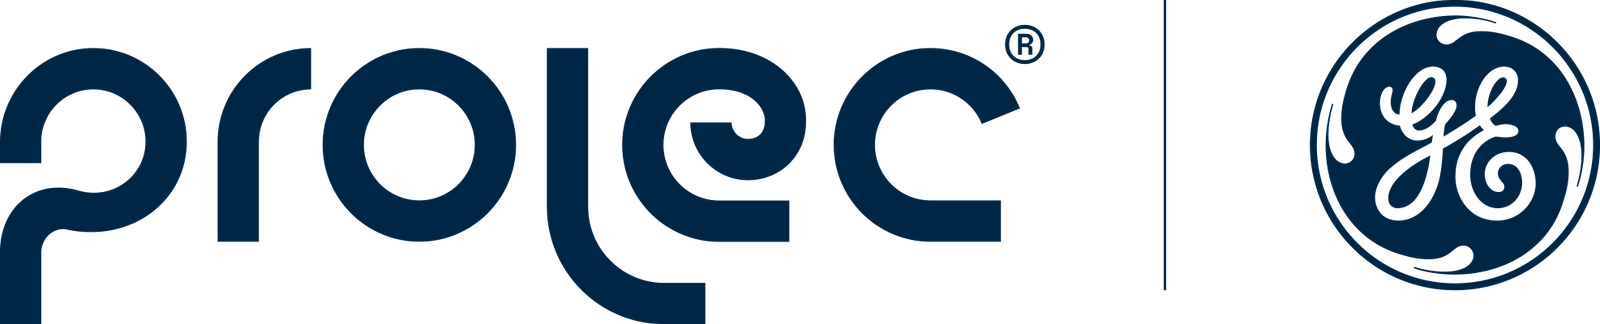 ProlecGE-logo-2